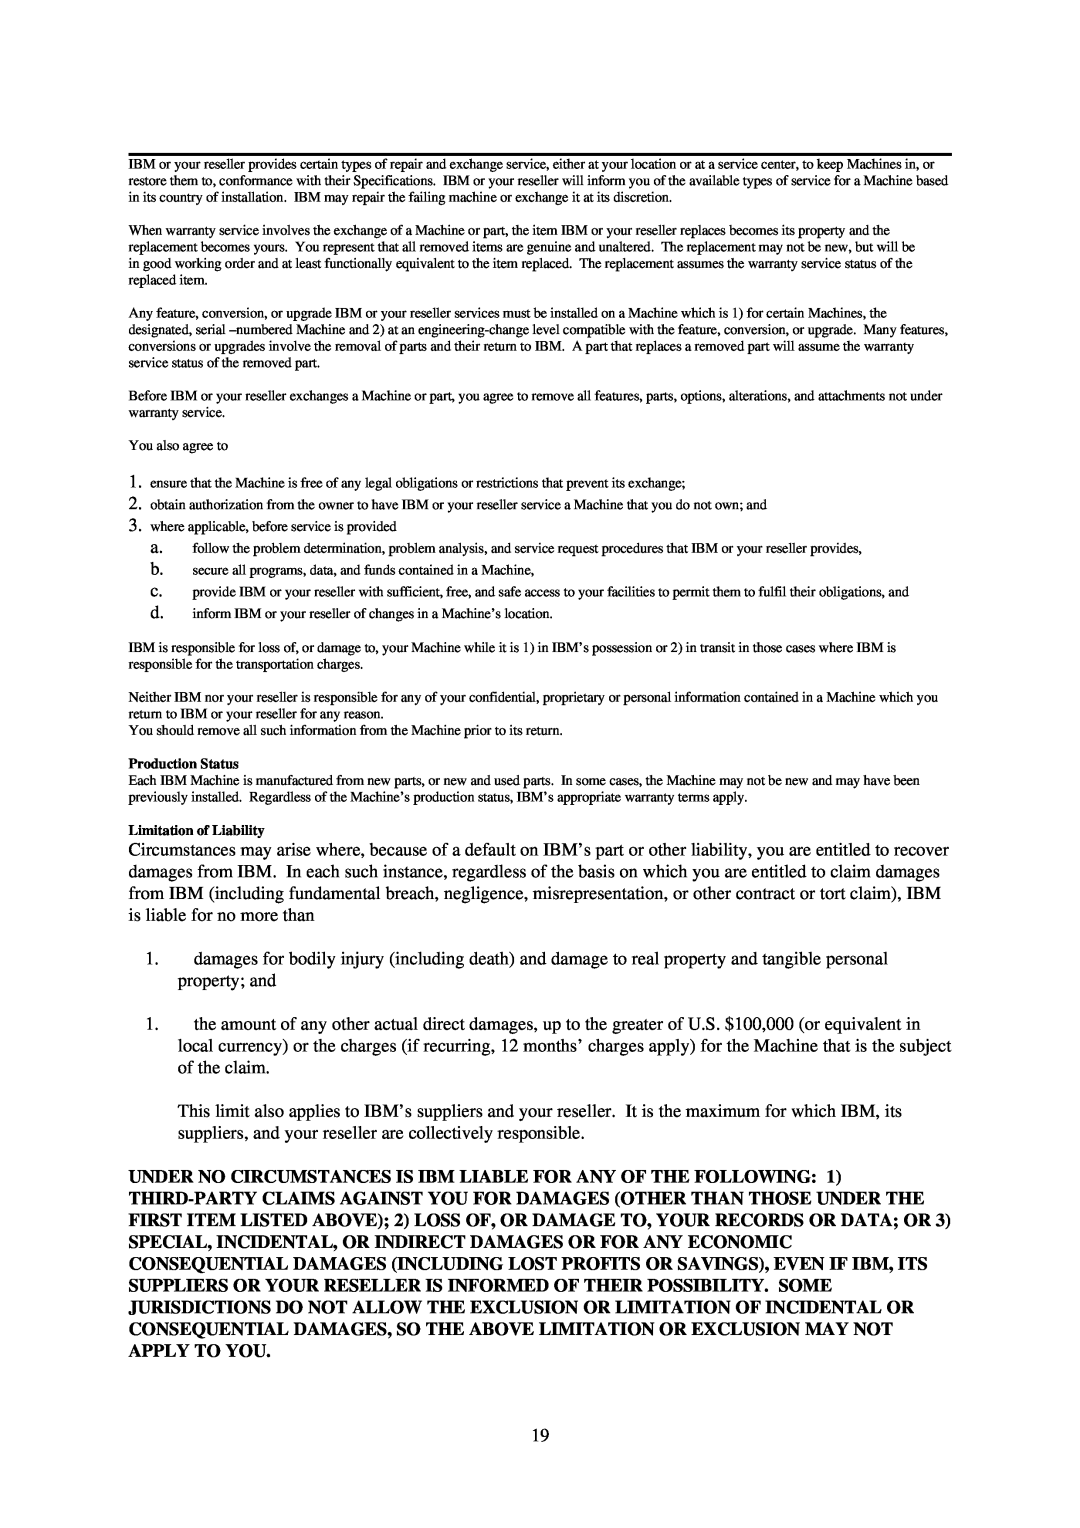 IBM L70 manual Production Status, Limitation of Liability 